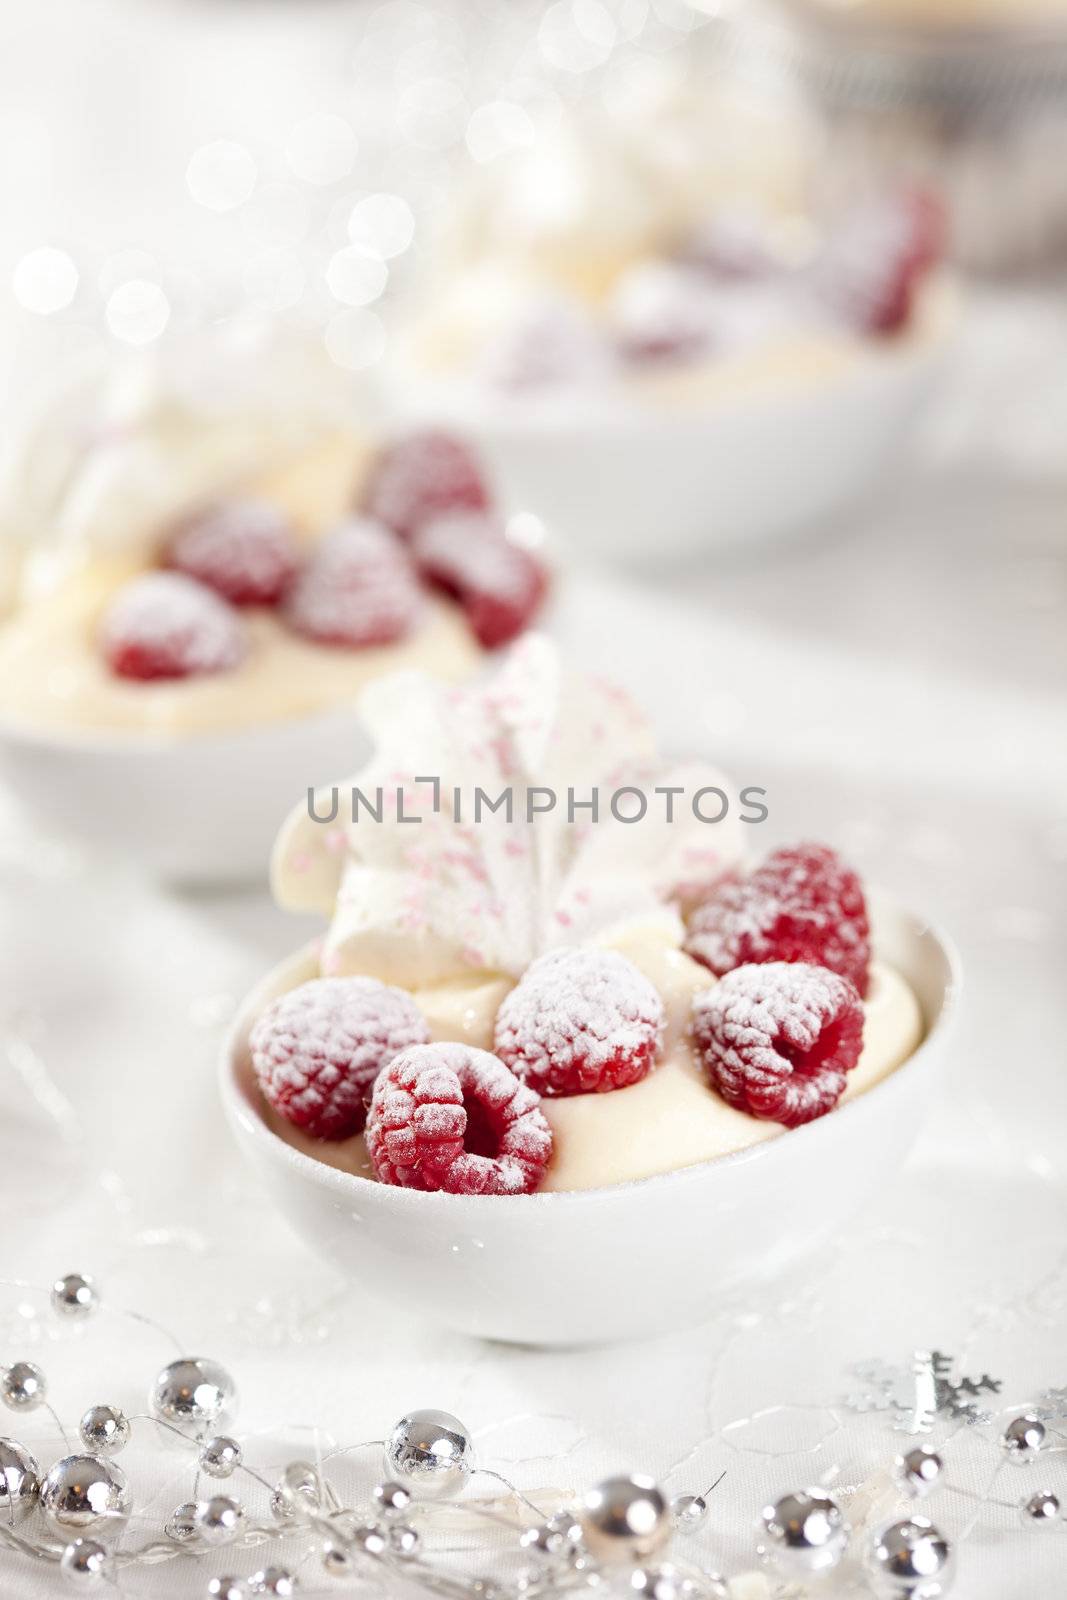 Festive dessert by Fotosmurf